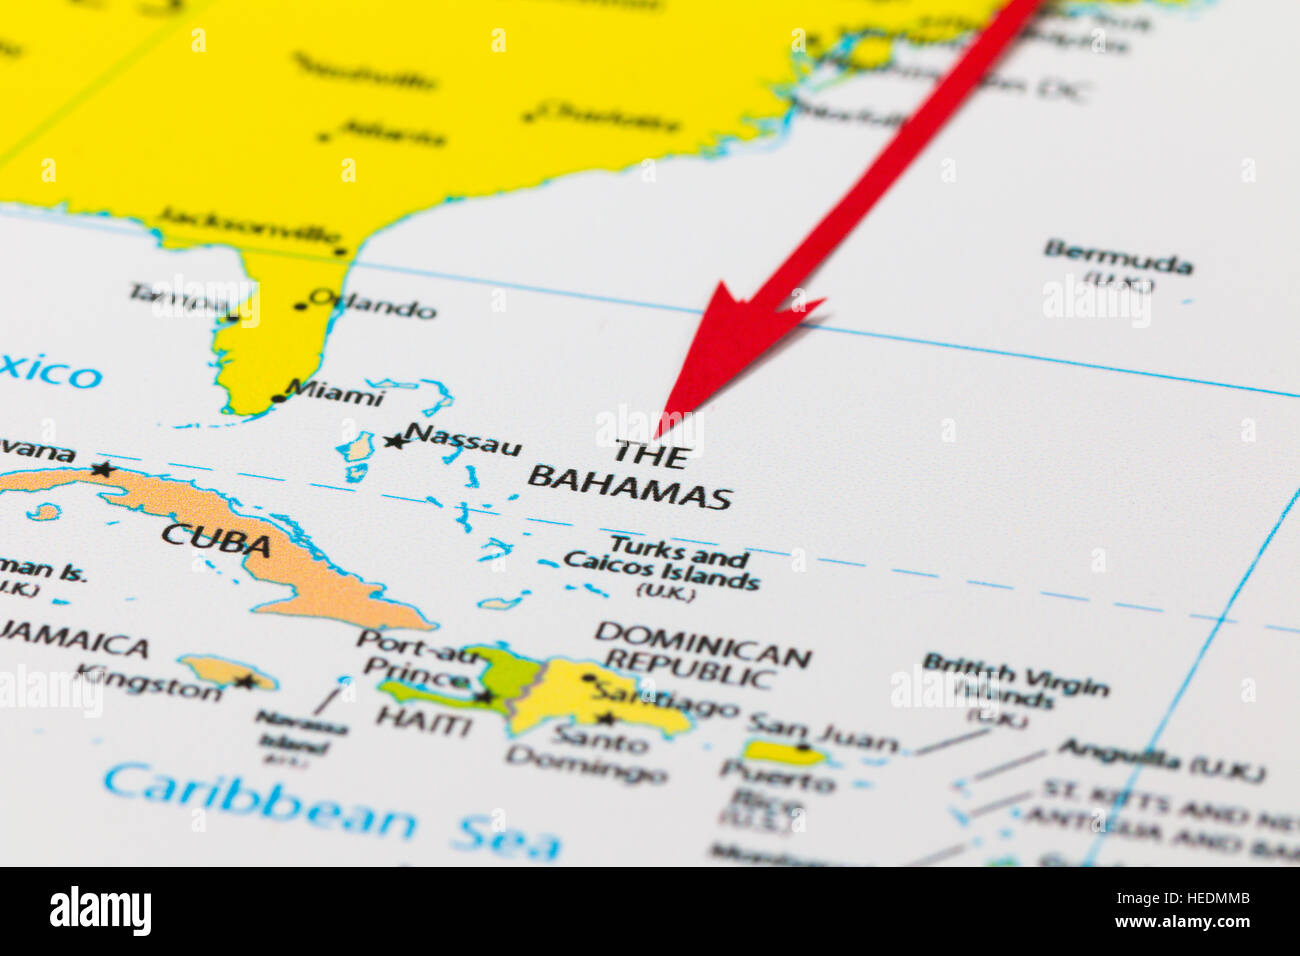 [Image: red-arrow-pointing-the-bahamas-islands-o...HEDMMB.jpg]